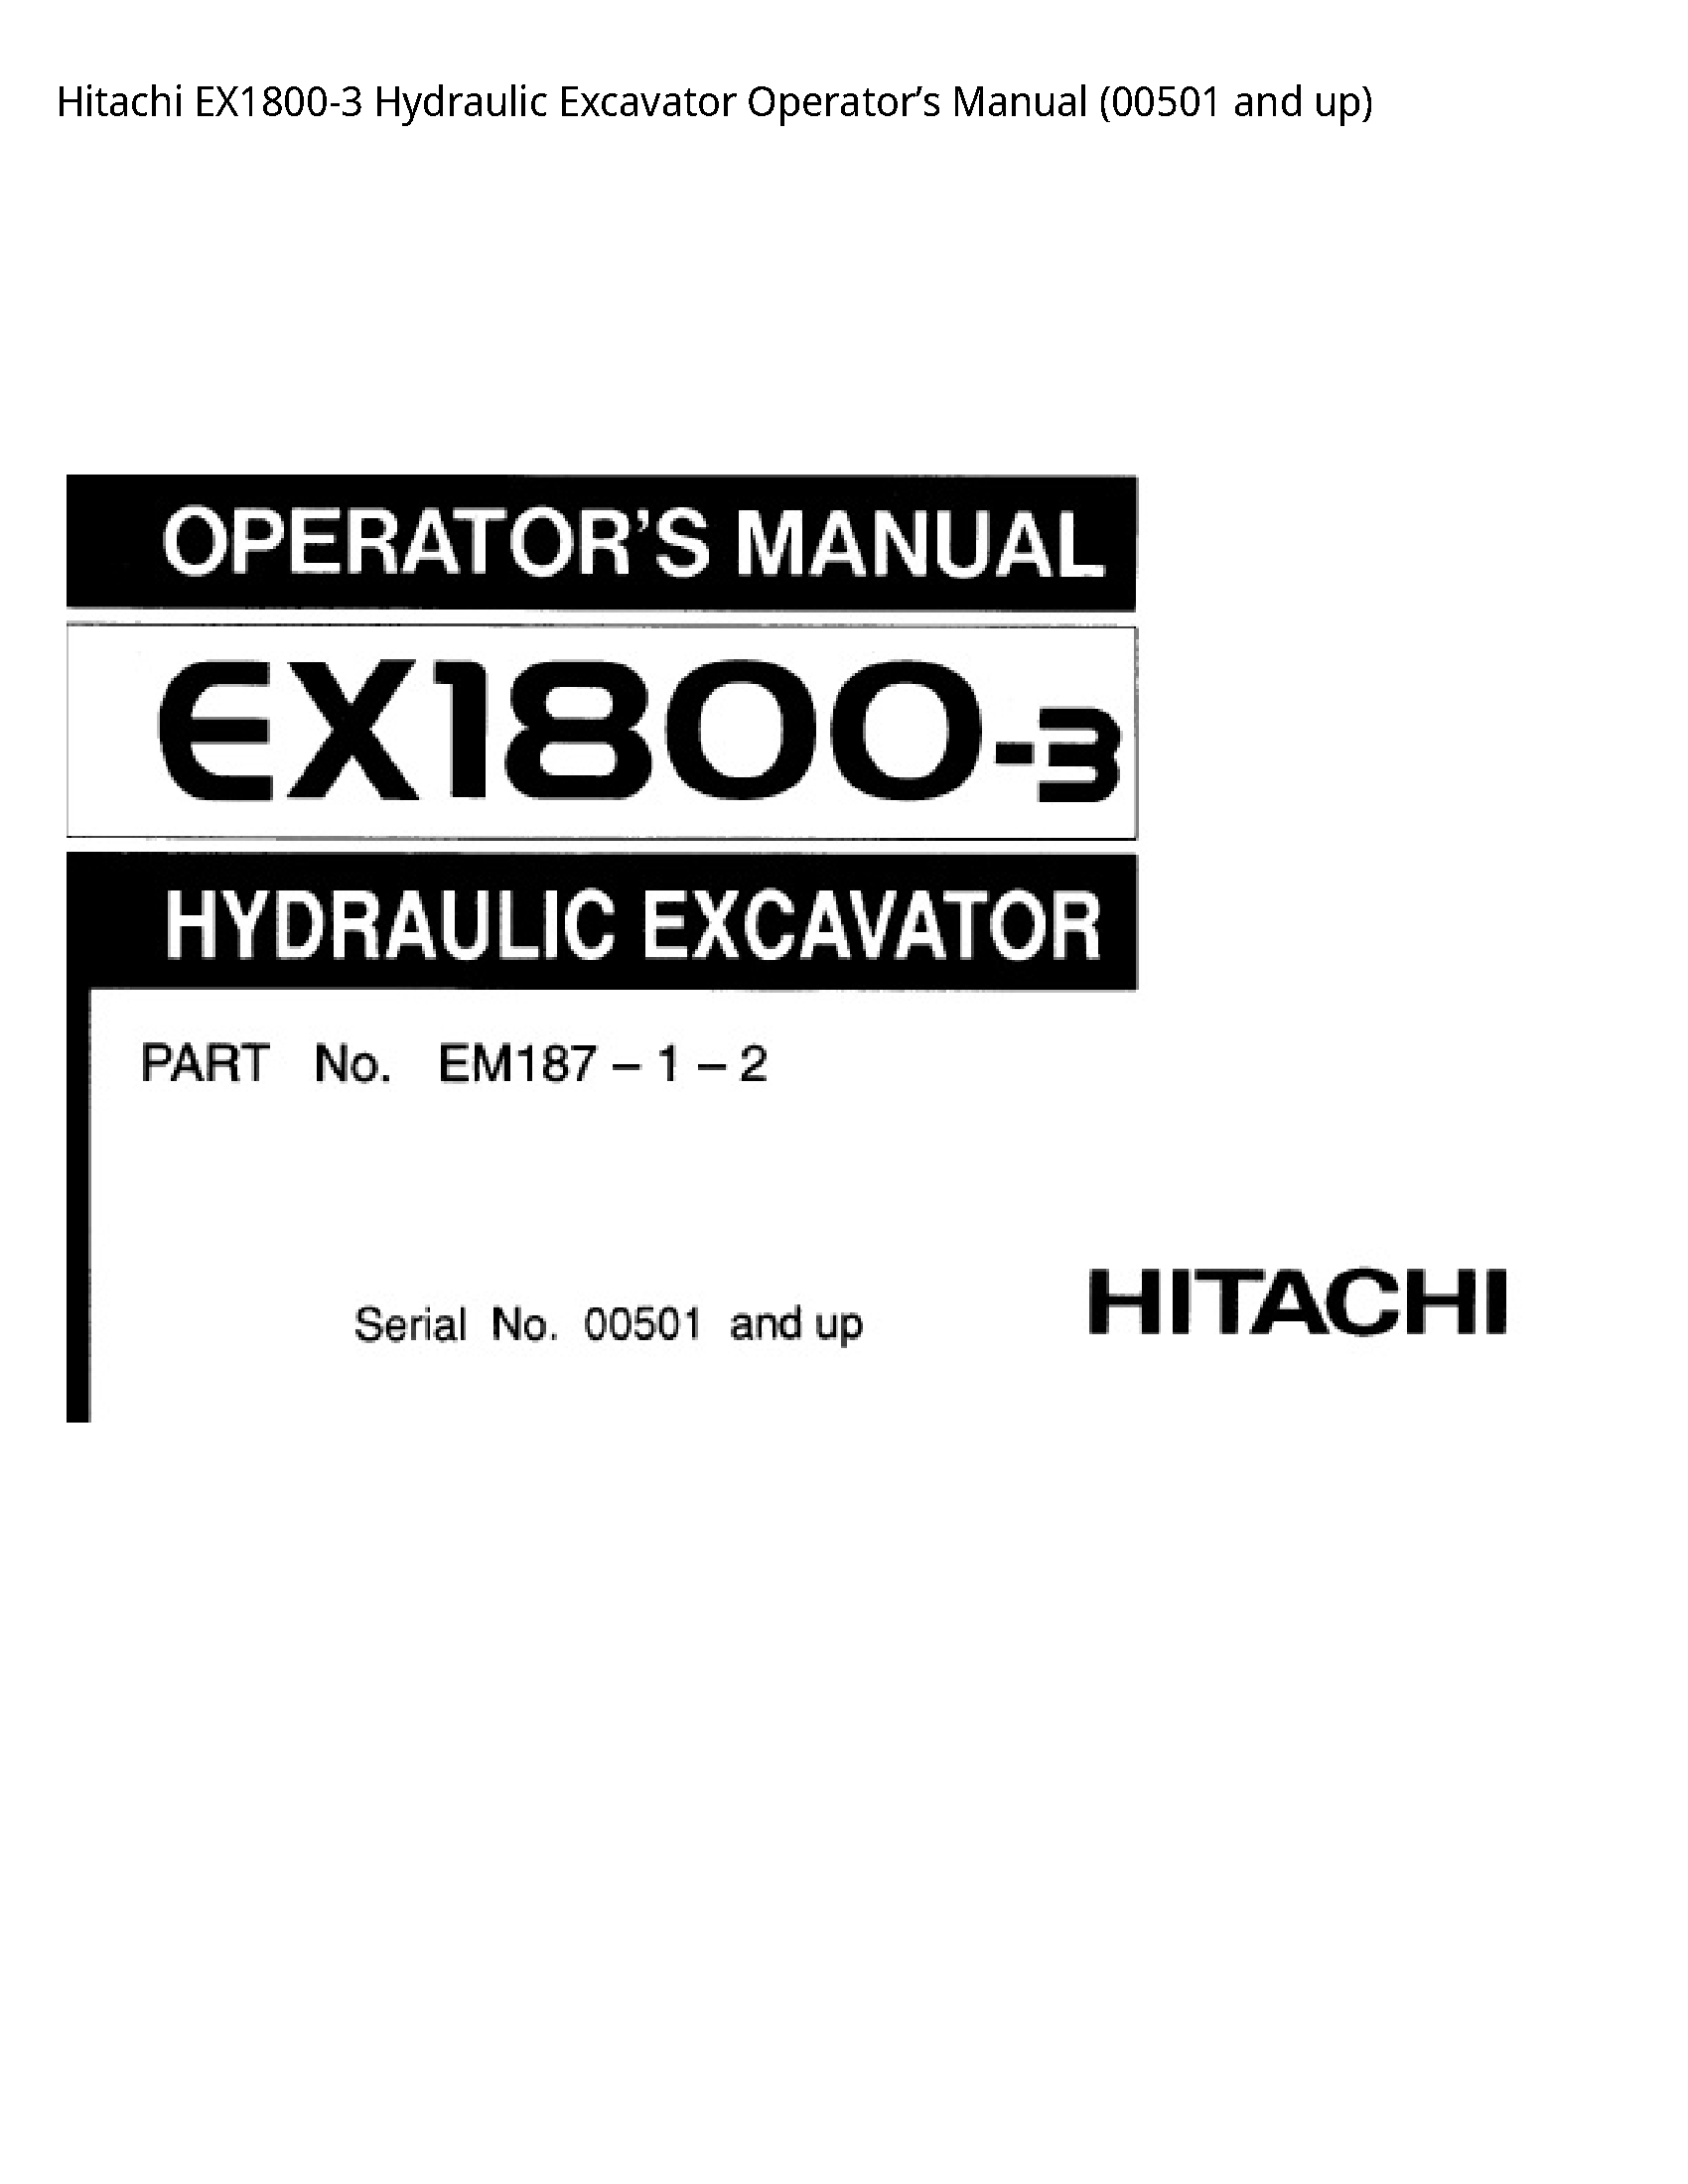 Hitachi EX1800-3 Hydraulic Excavator Operator’s manual